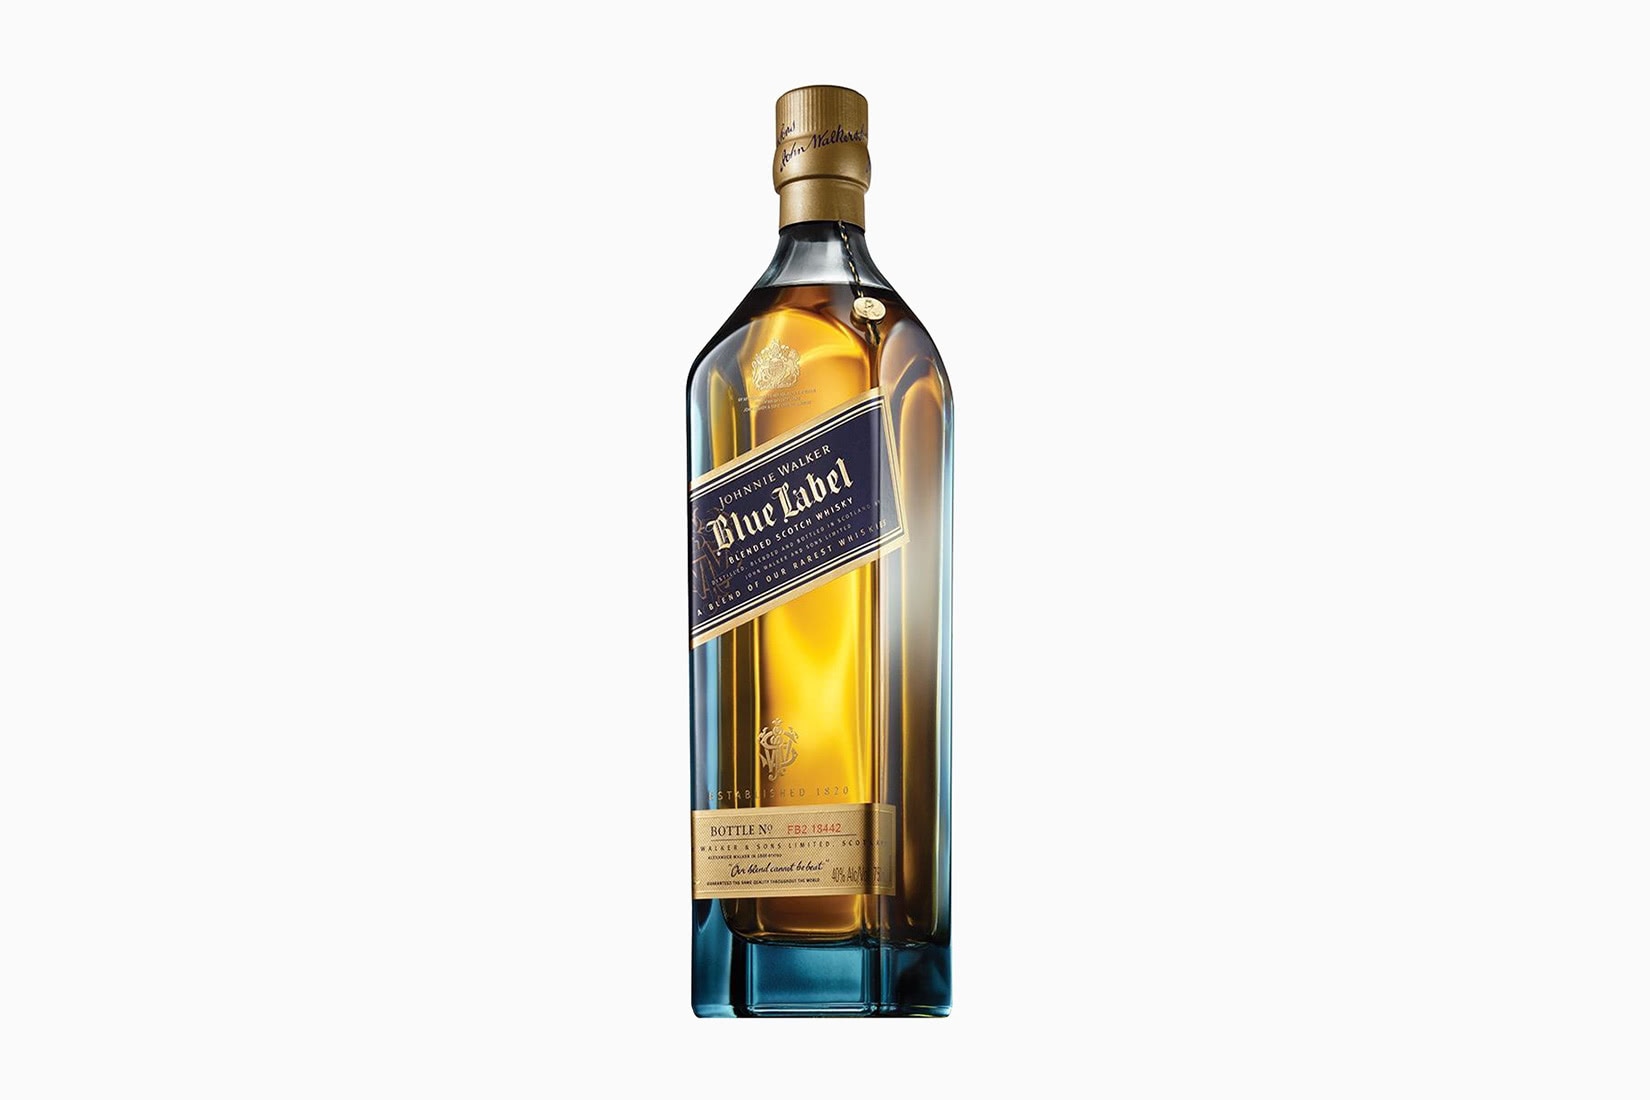  johnnie walker bottiglia prezzo dimensioni whisky - Luxe Digital 